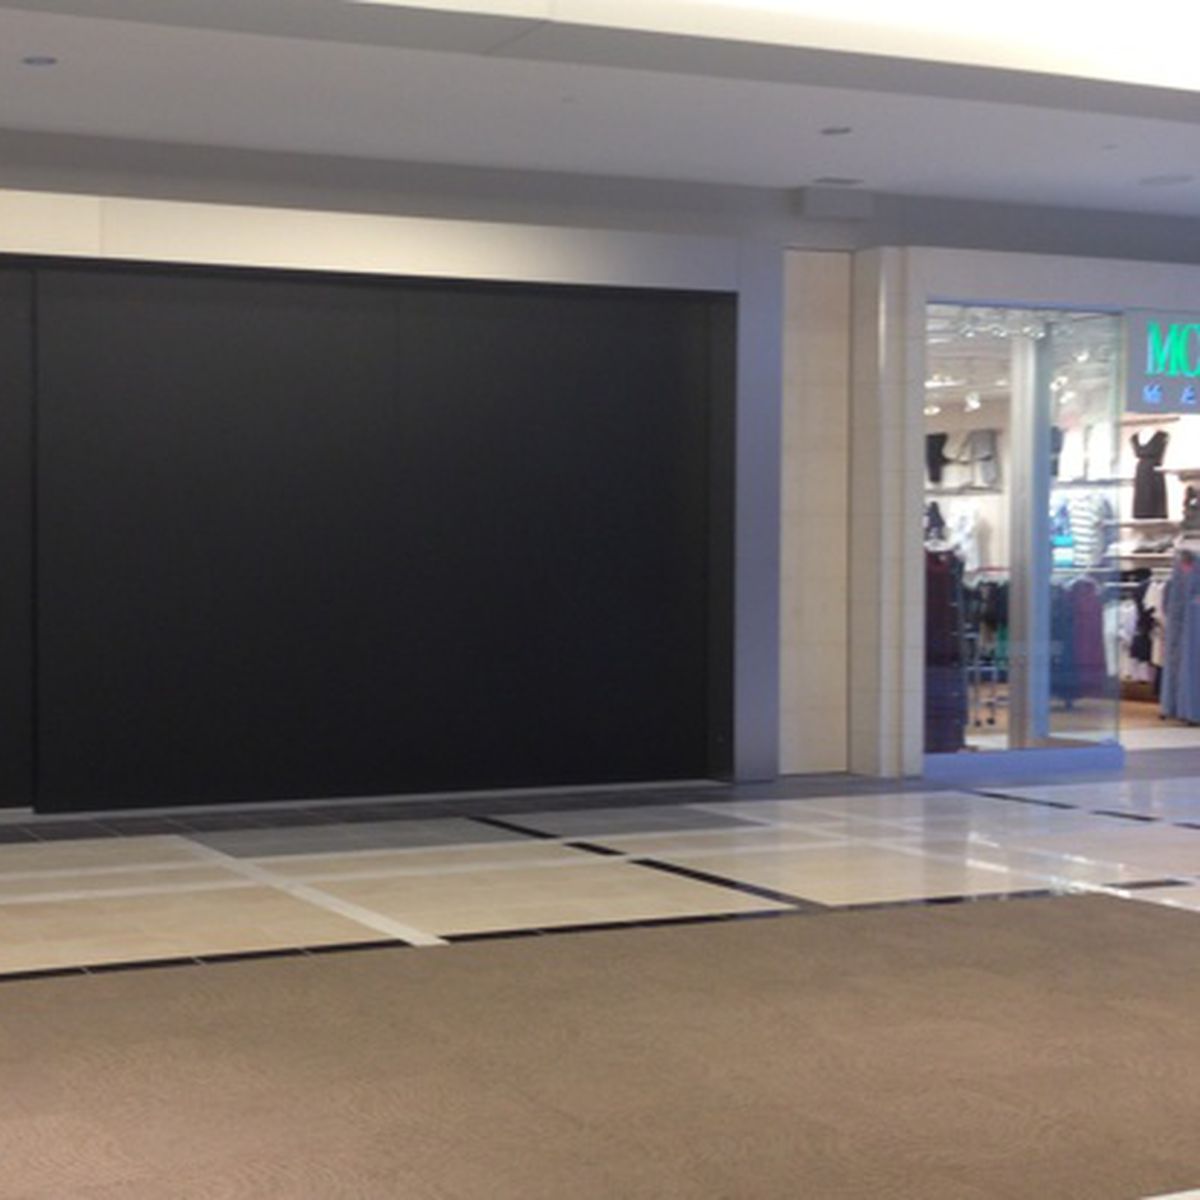 Apple Store Opening at Massive American Dream Mall Outside New York City -  MacRumors